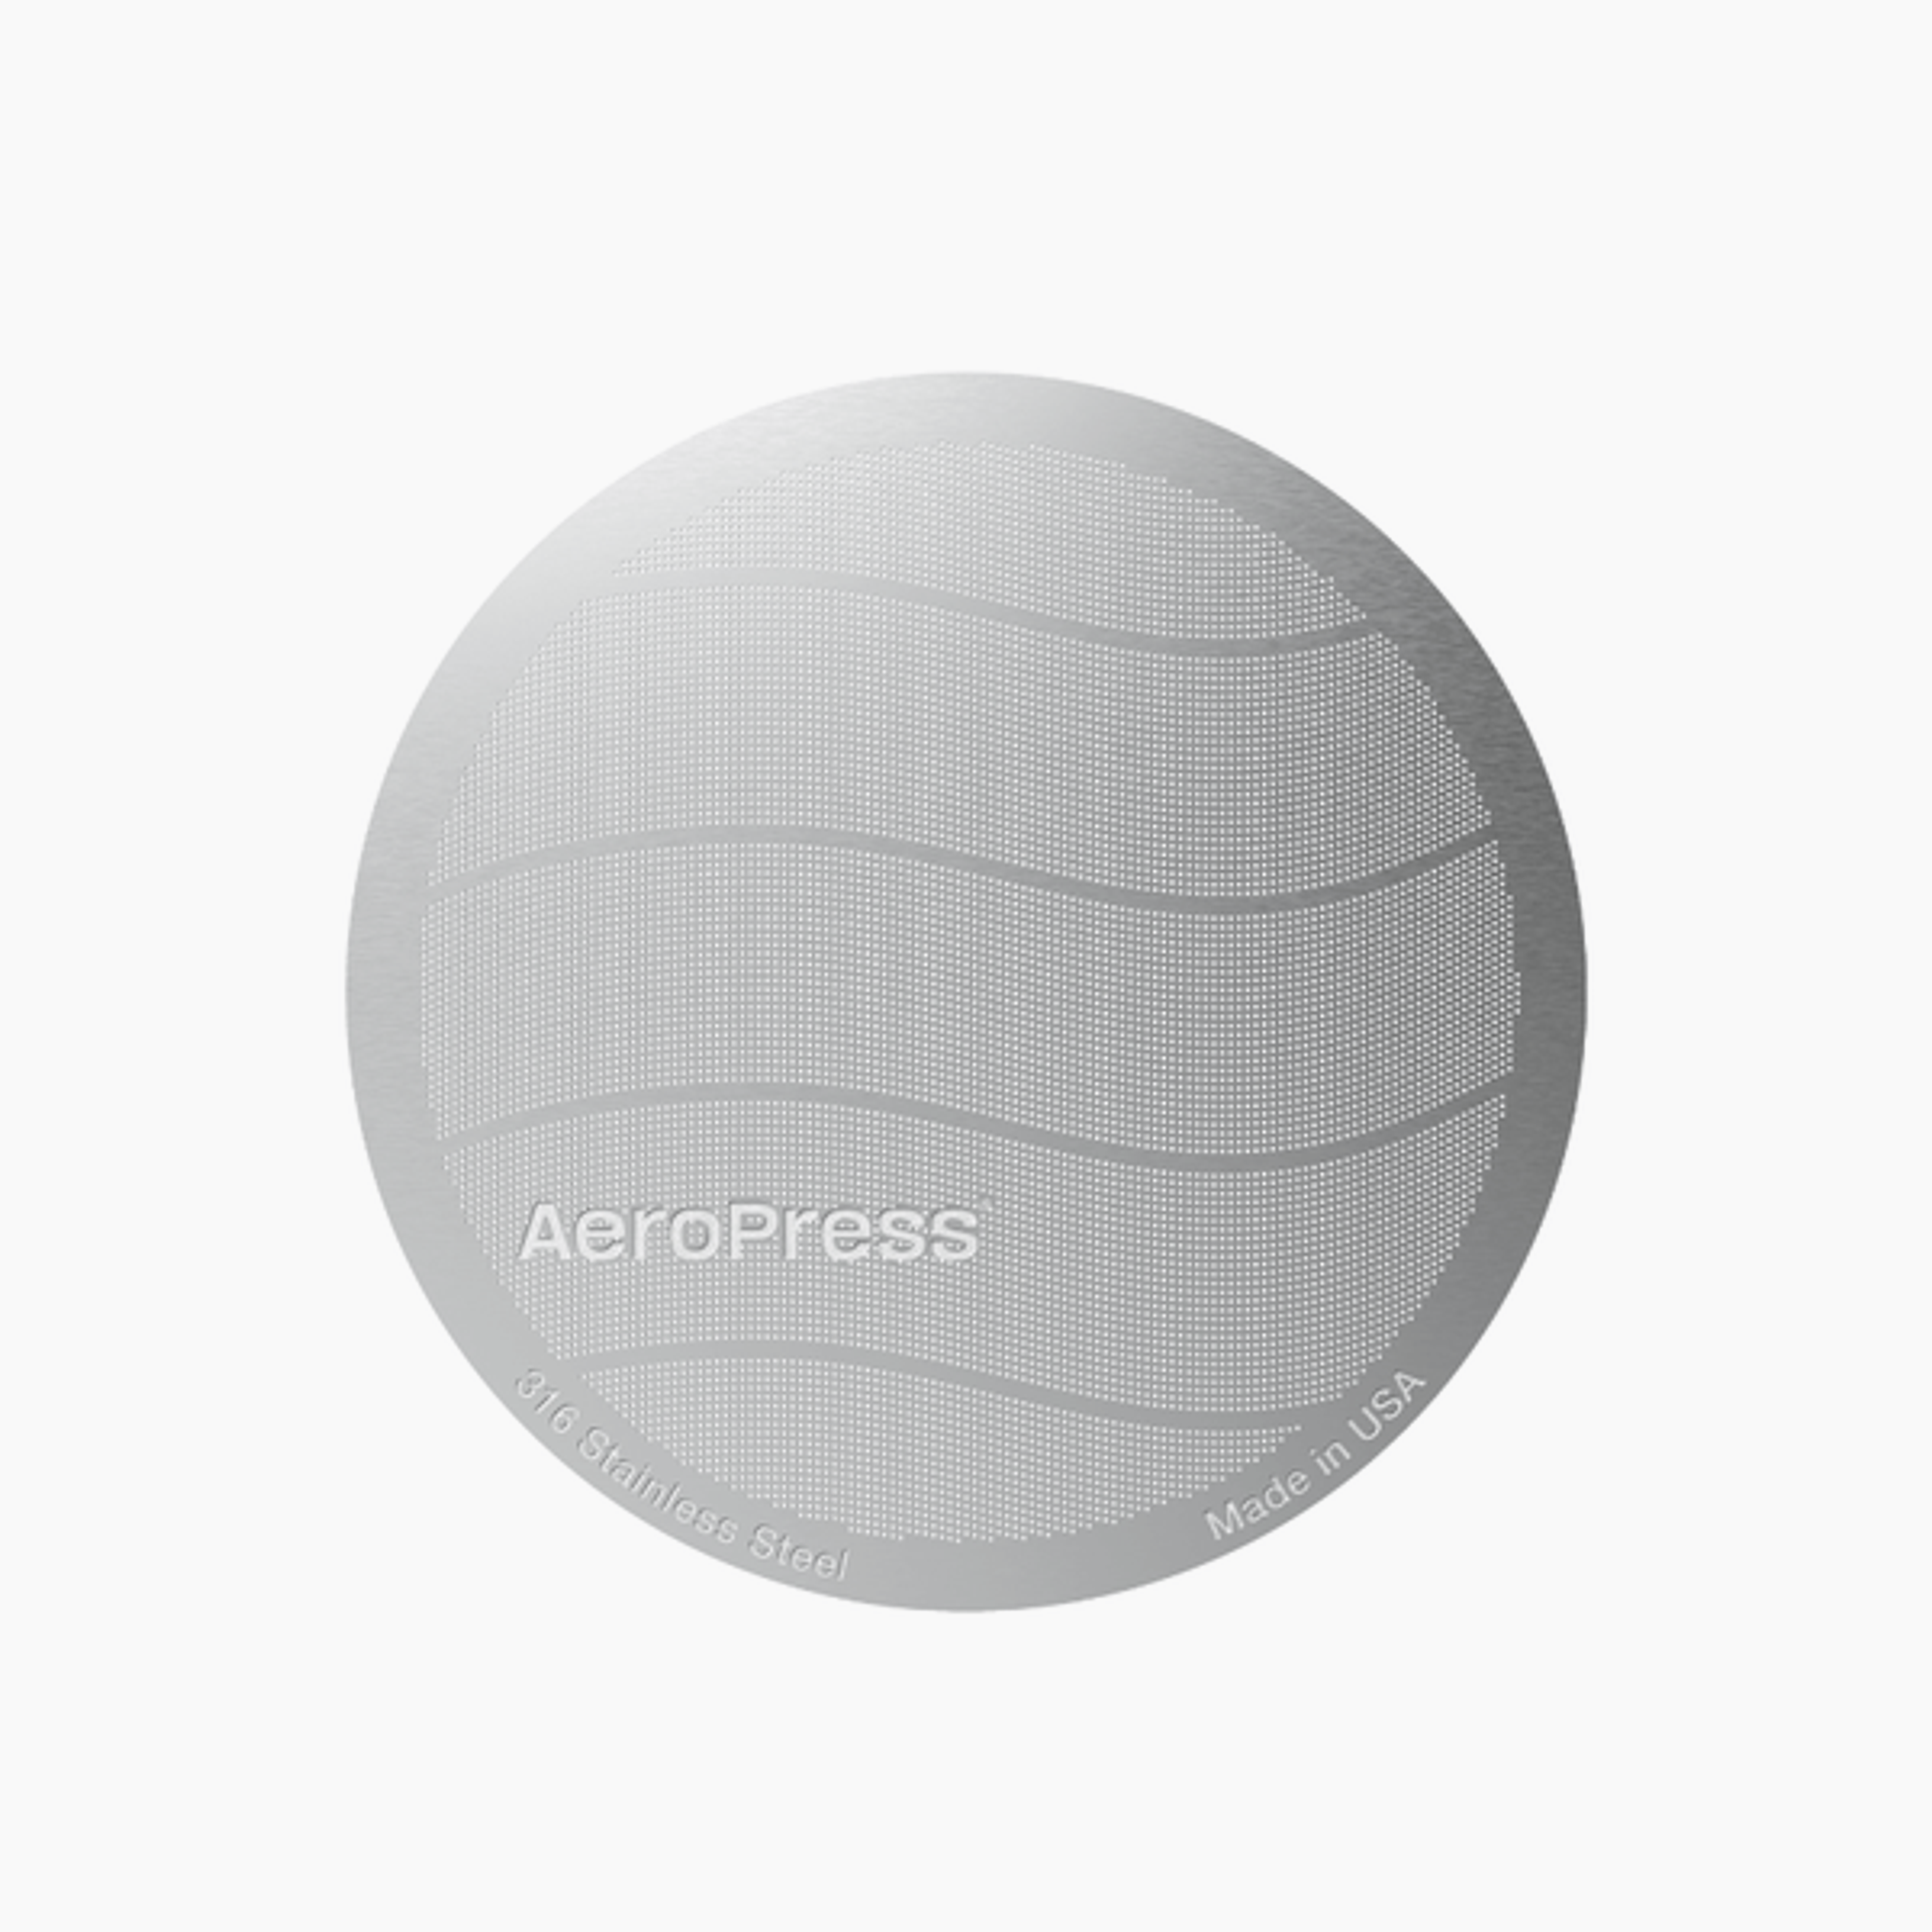 AeroPress Go Coffee Maker, Stainless Steel Filter, & Flow Control Filter Cap Bundle